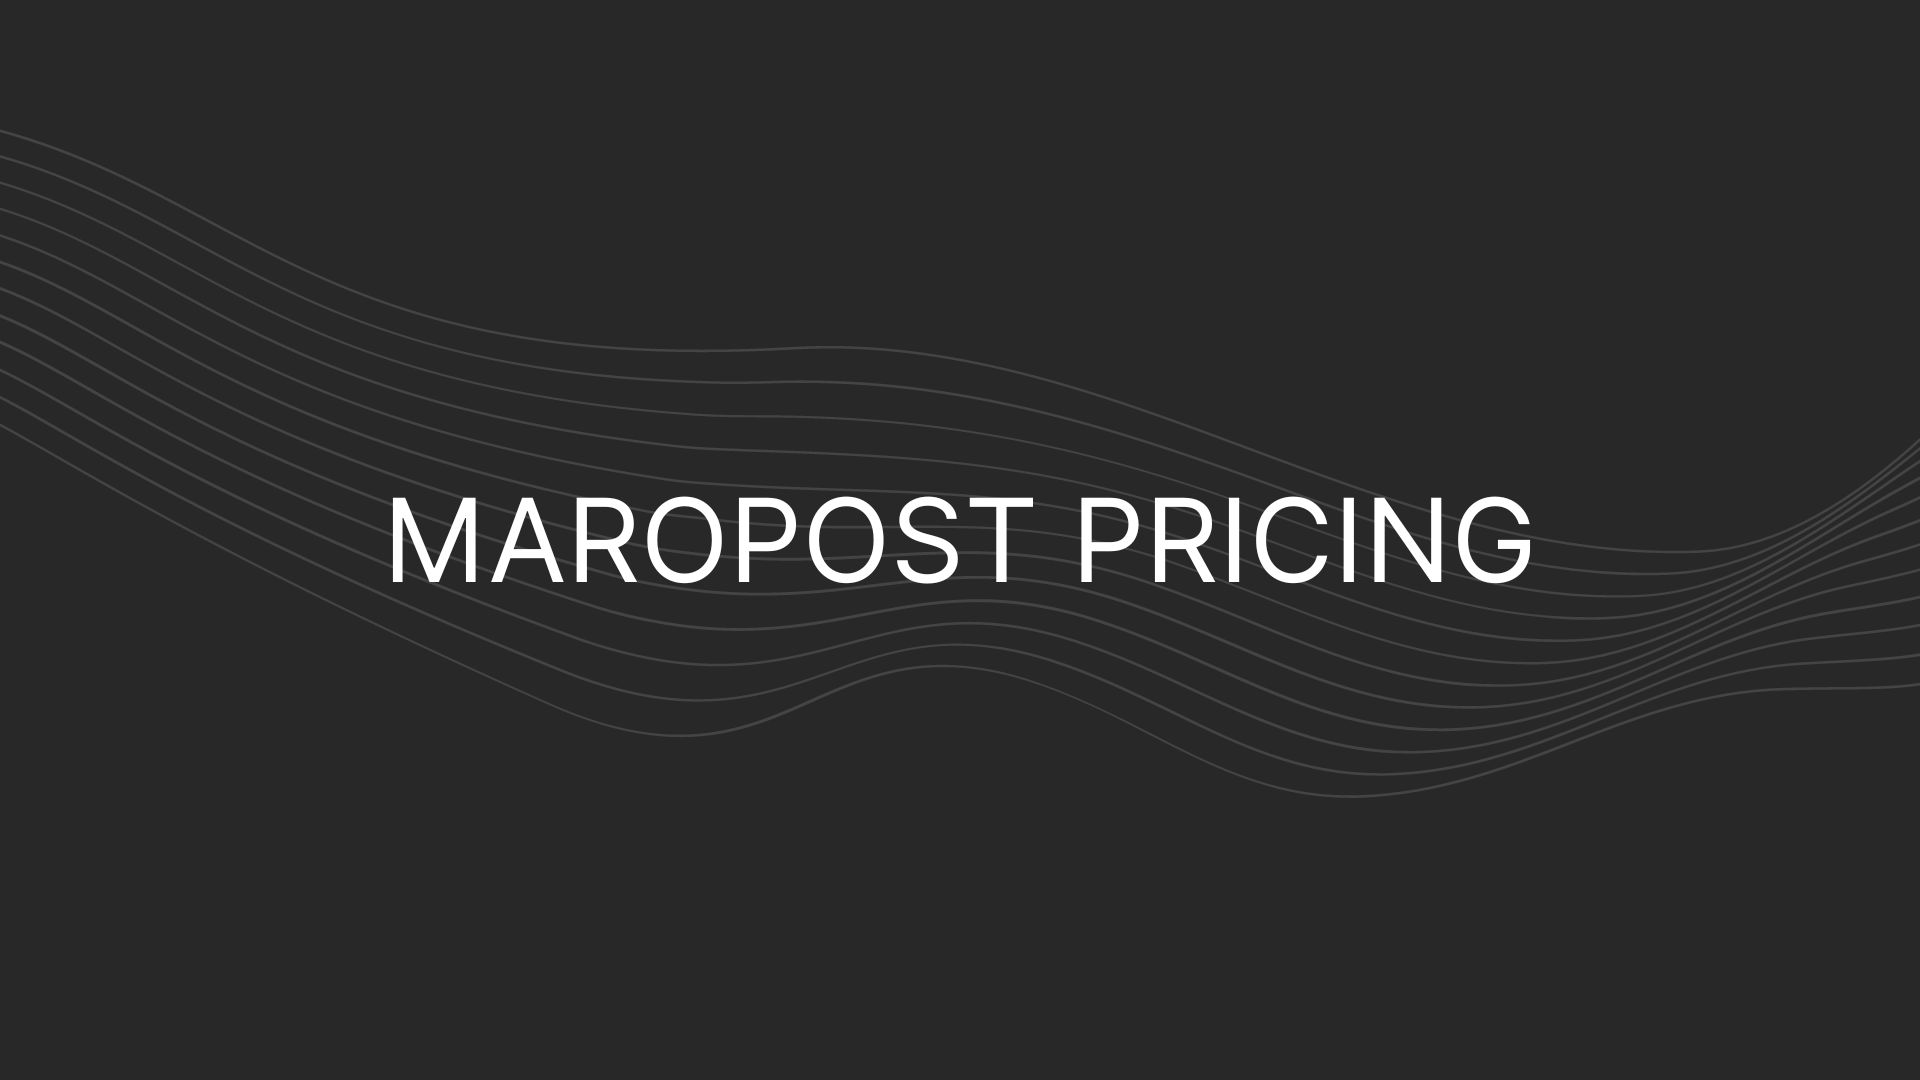 Maropost Pricing